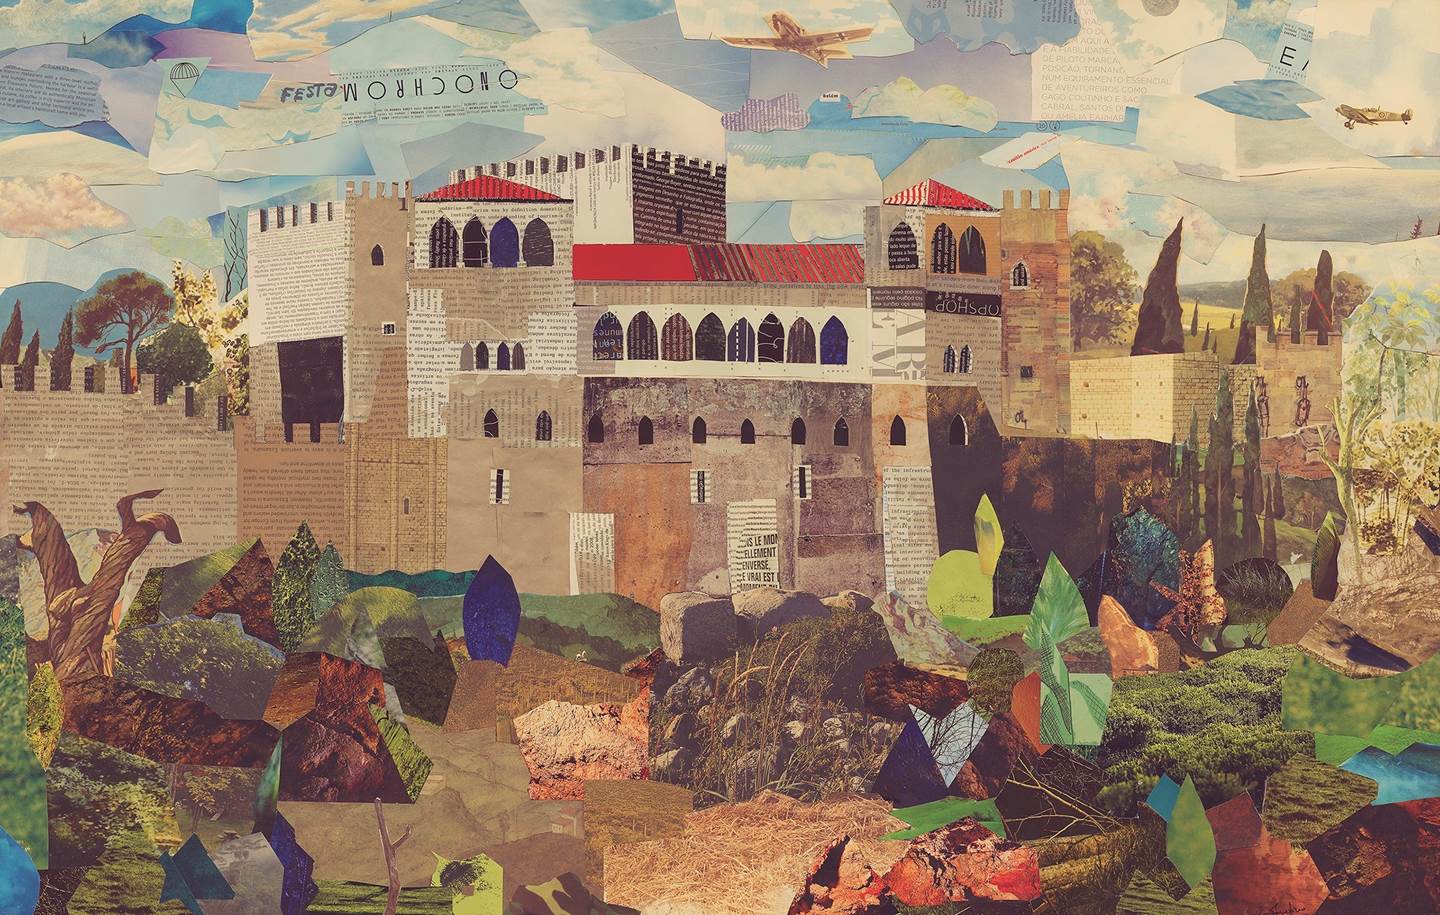 Entre muralhas (Castelo de Leiria), original Architecture Toile Dessin et illustration par Maria João Faustino